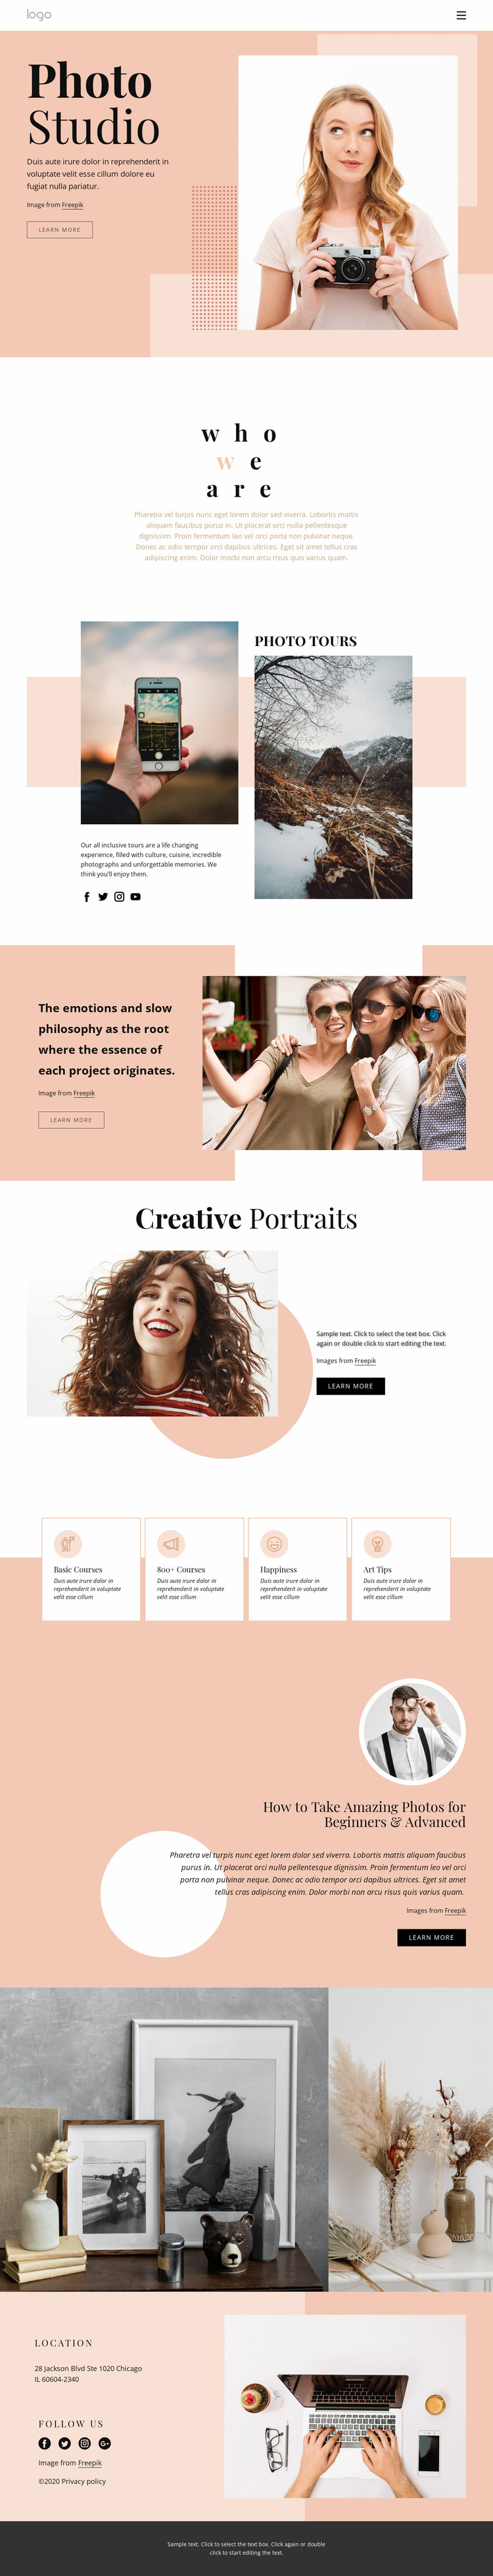 Photography courses Website Design